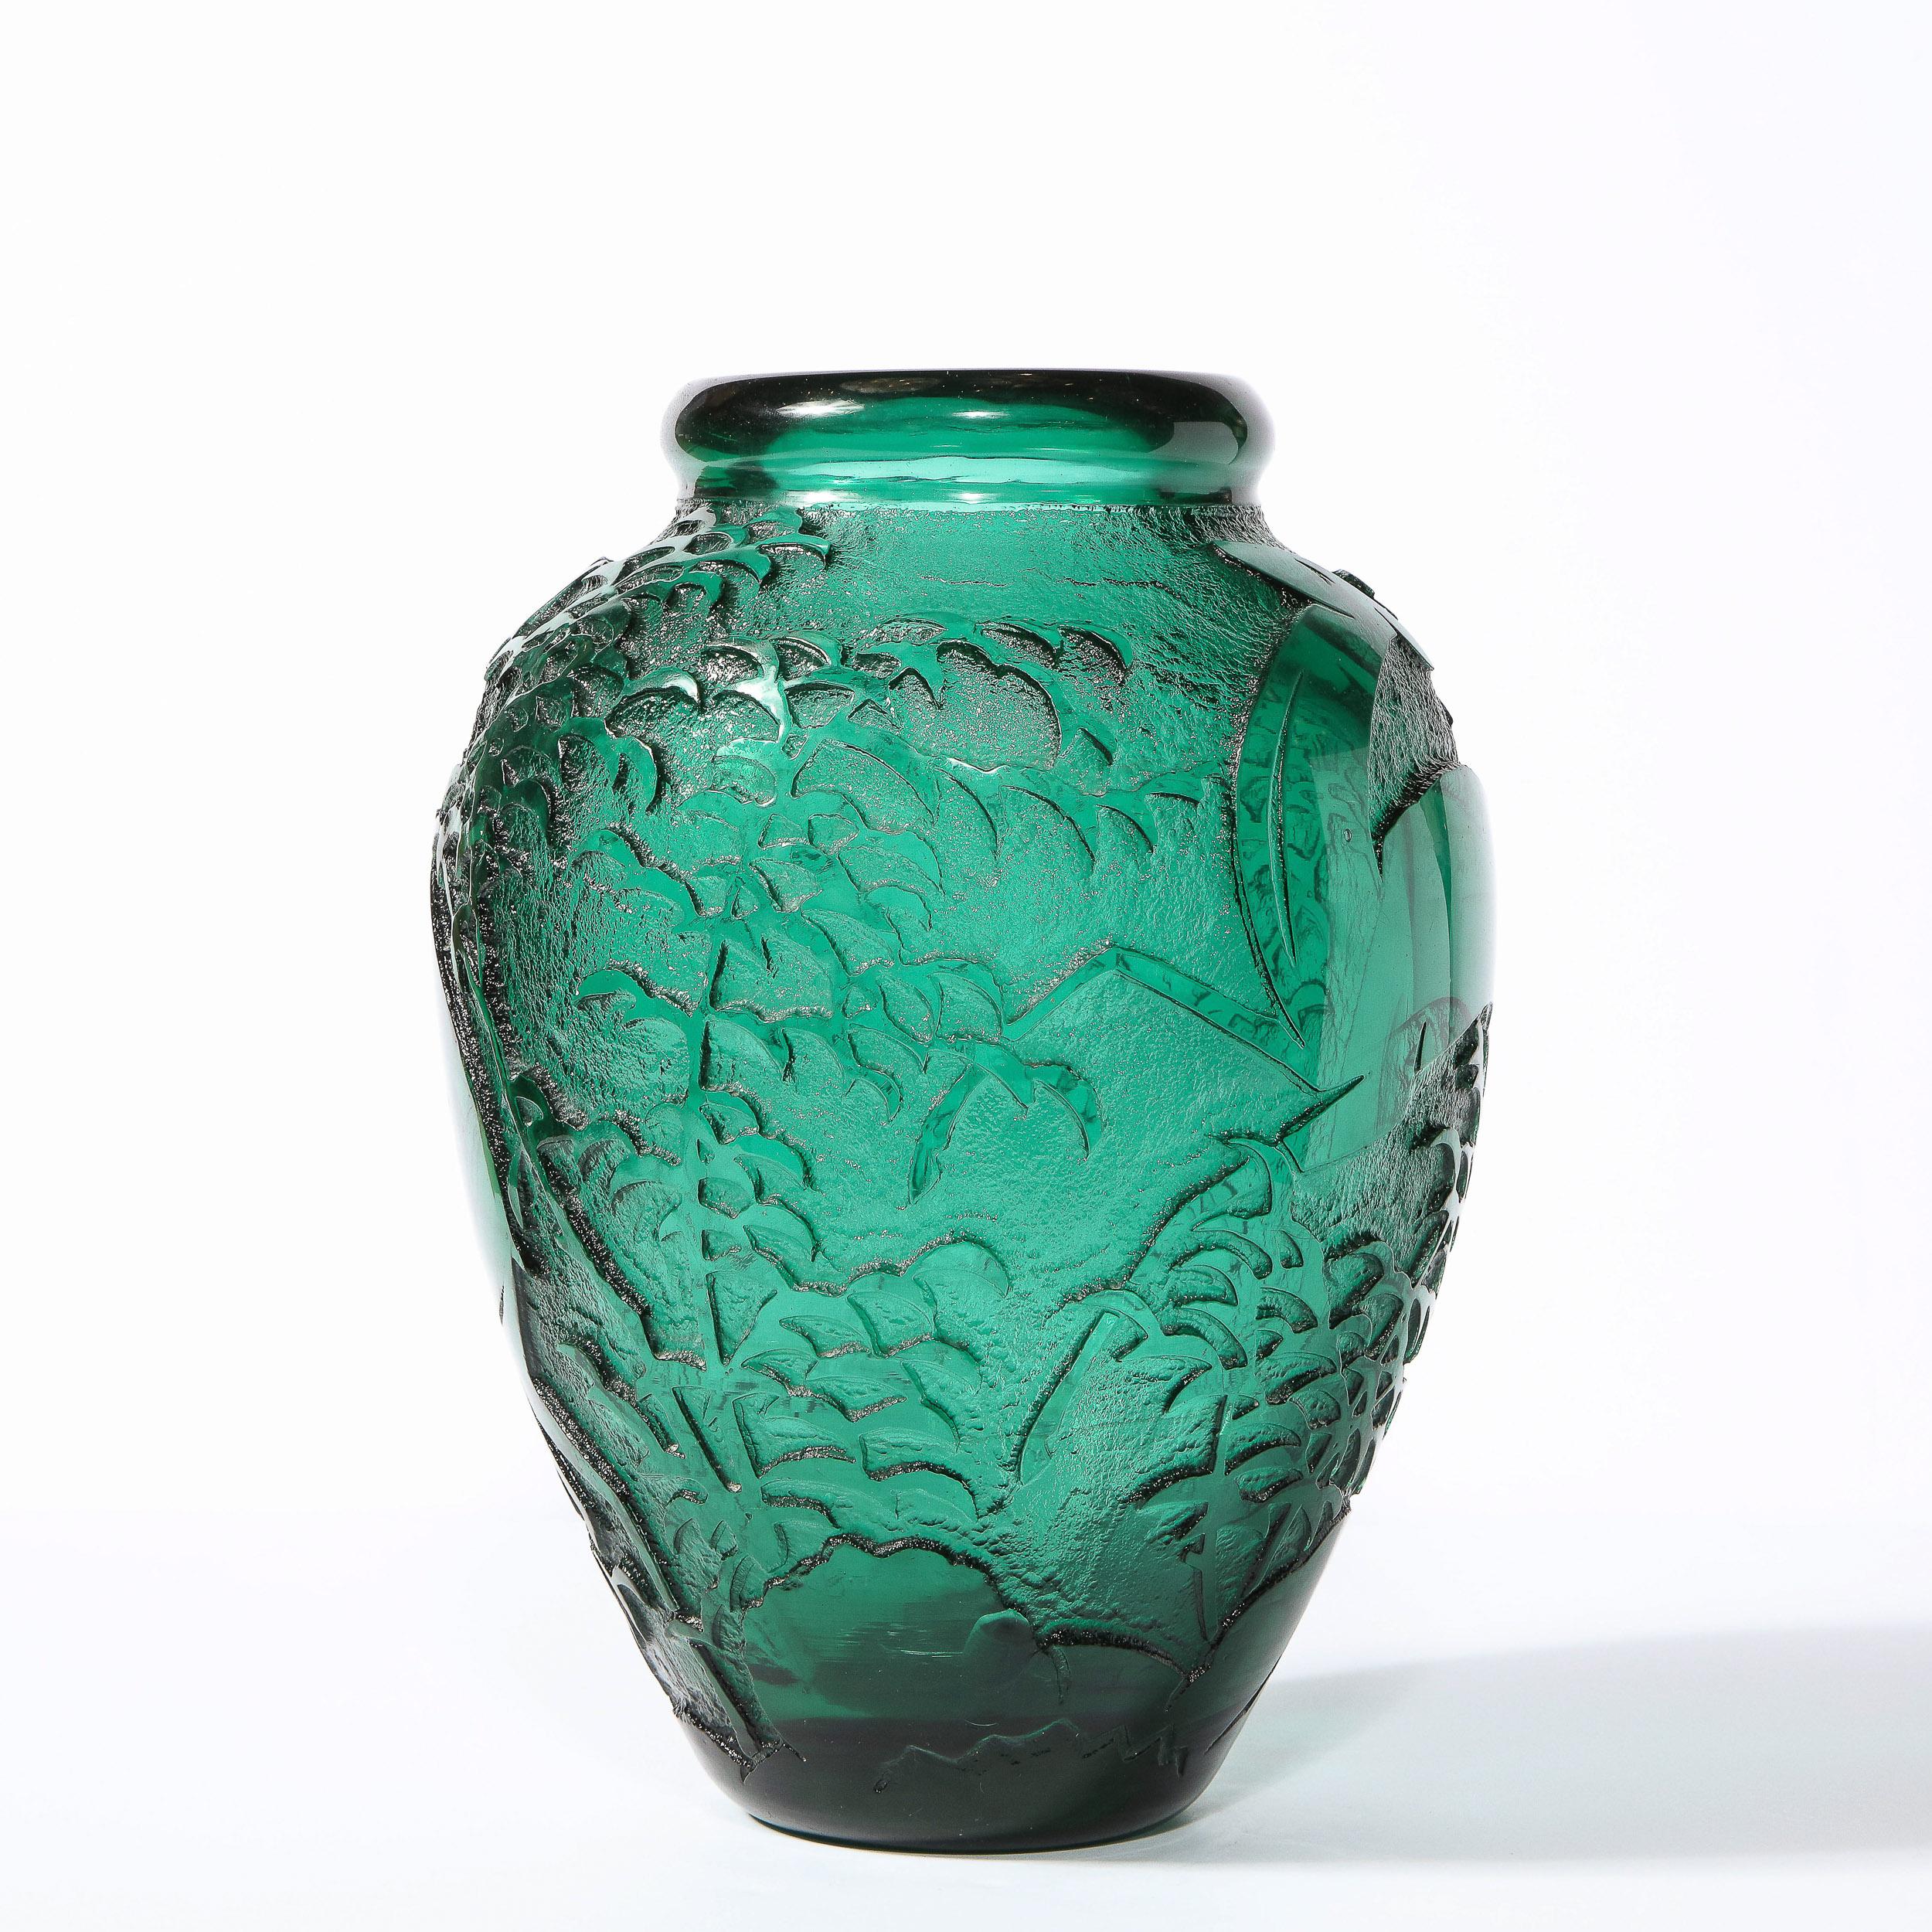 French Art Deco Handblown Teal Vase w/ Stylized Ibis & Cloud Motifs Signed Daum Nancy